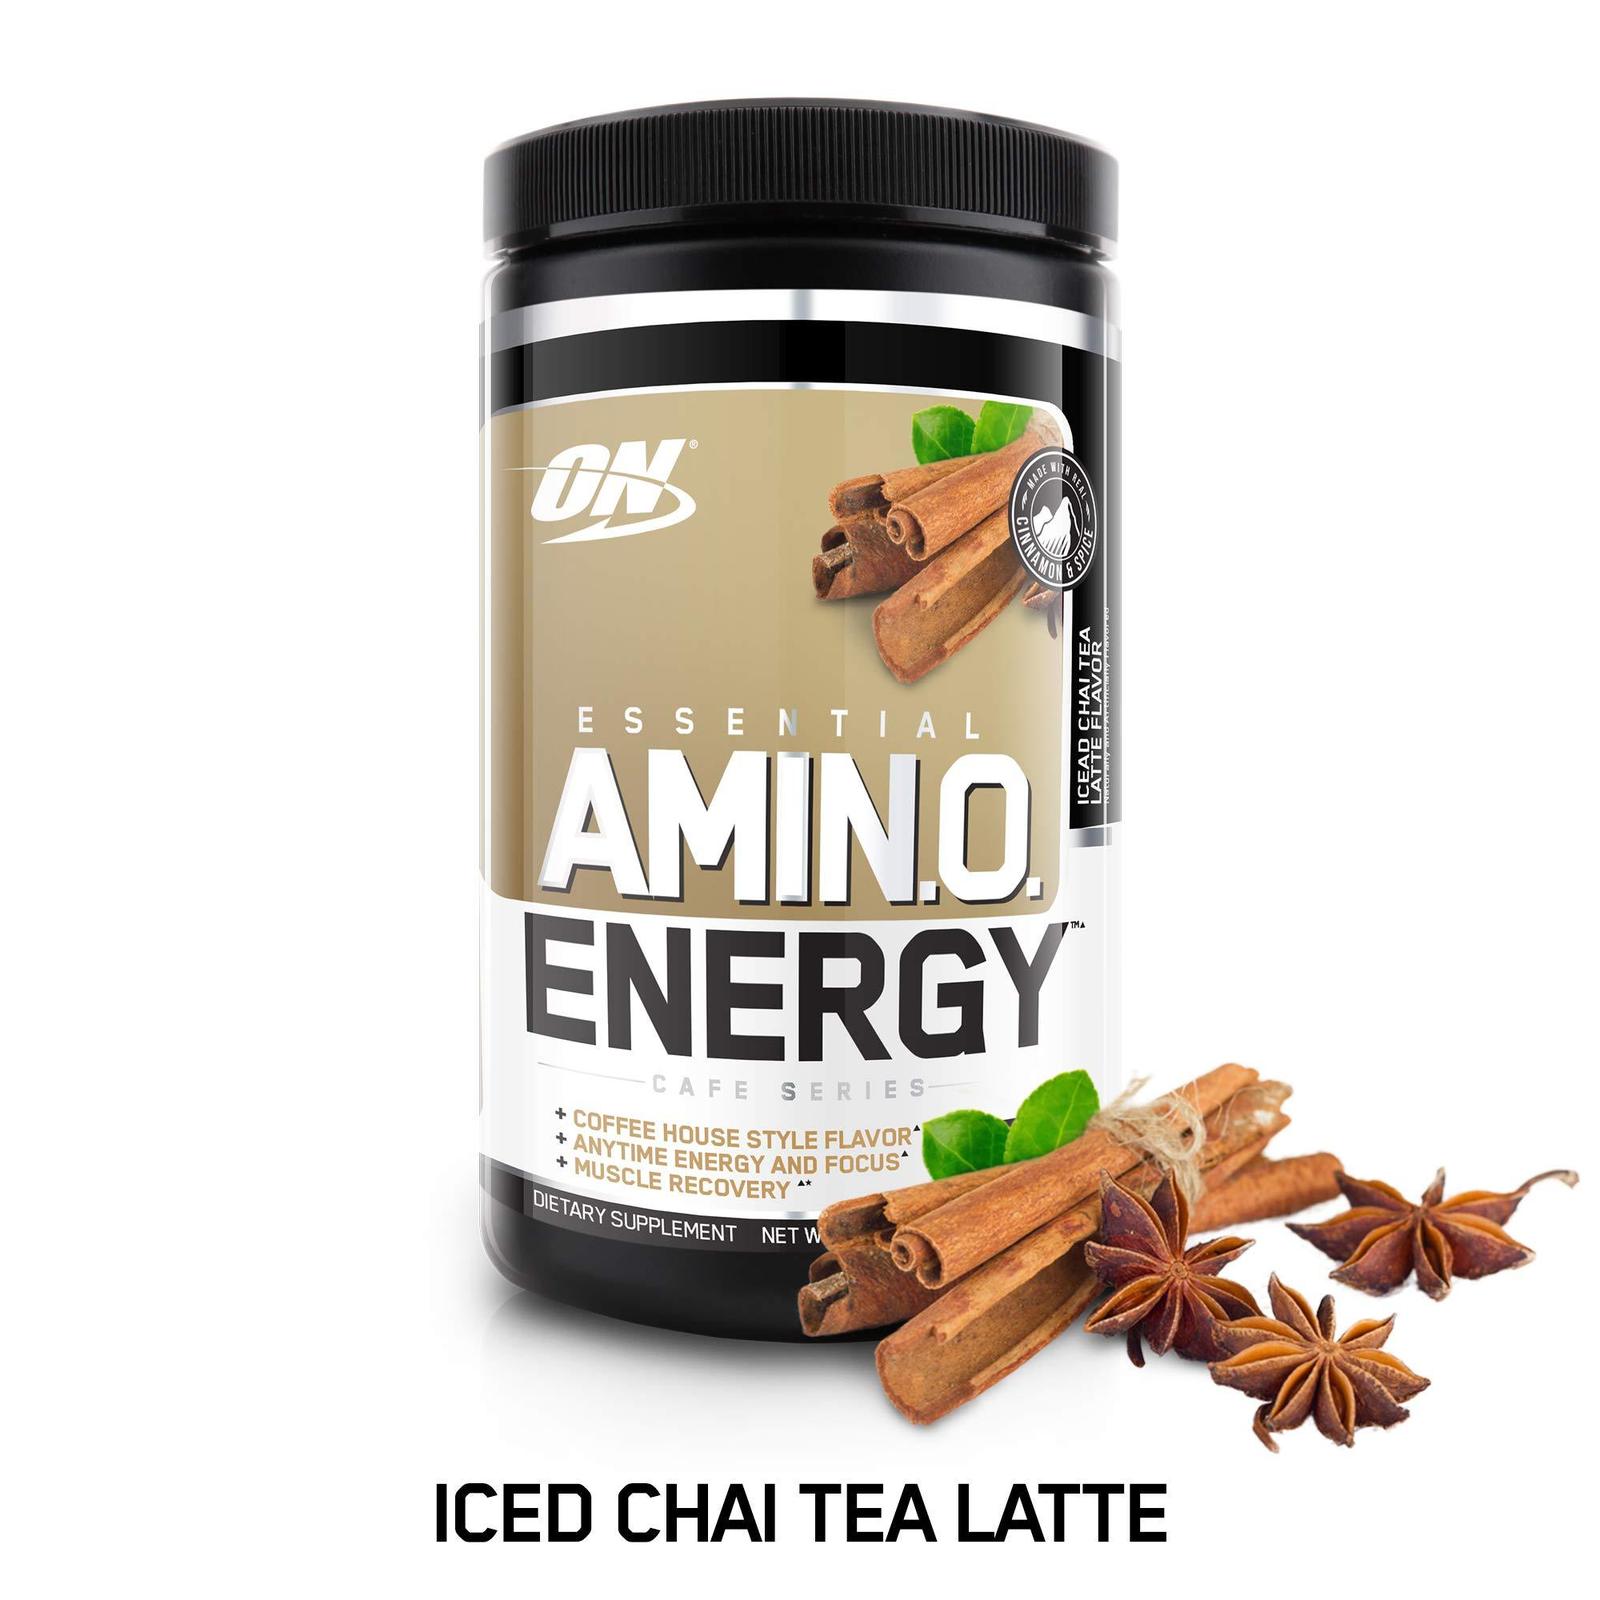 OPTIMUM NUTRITION ESSENTIAL AMINO ENERGY, Iced Chai Tea Latte, Keto Friendly BCA